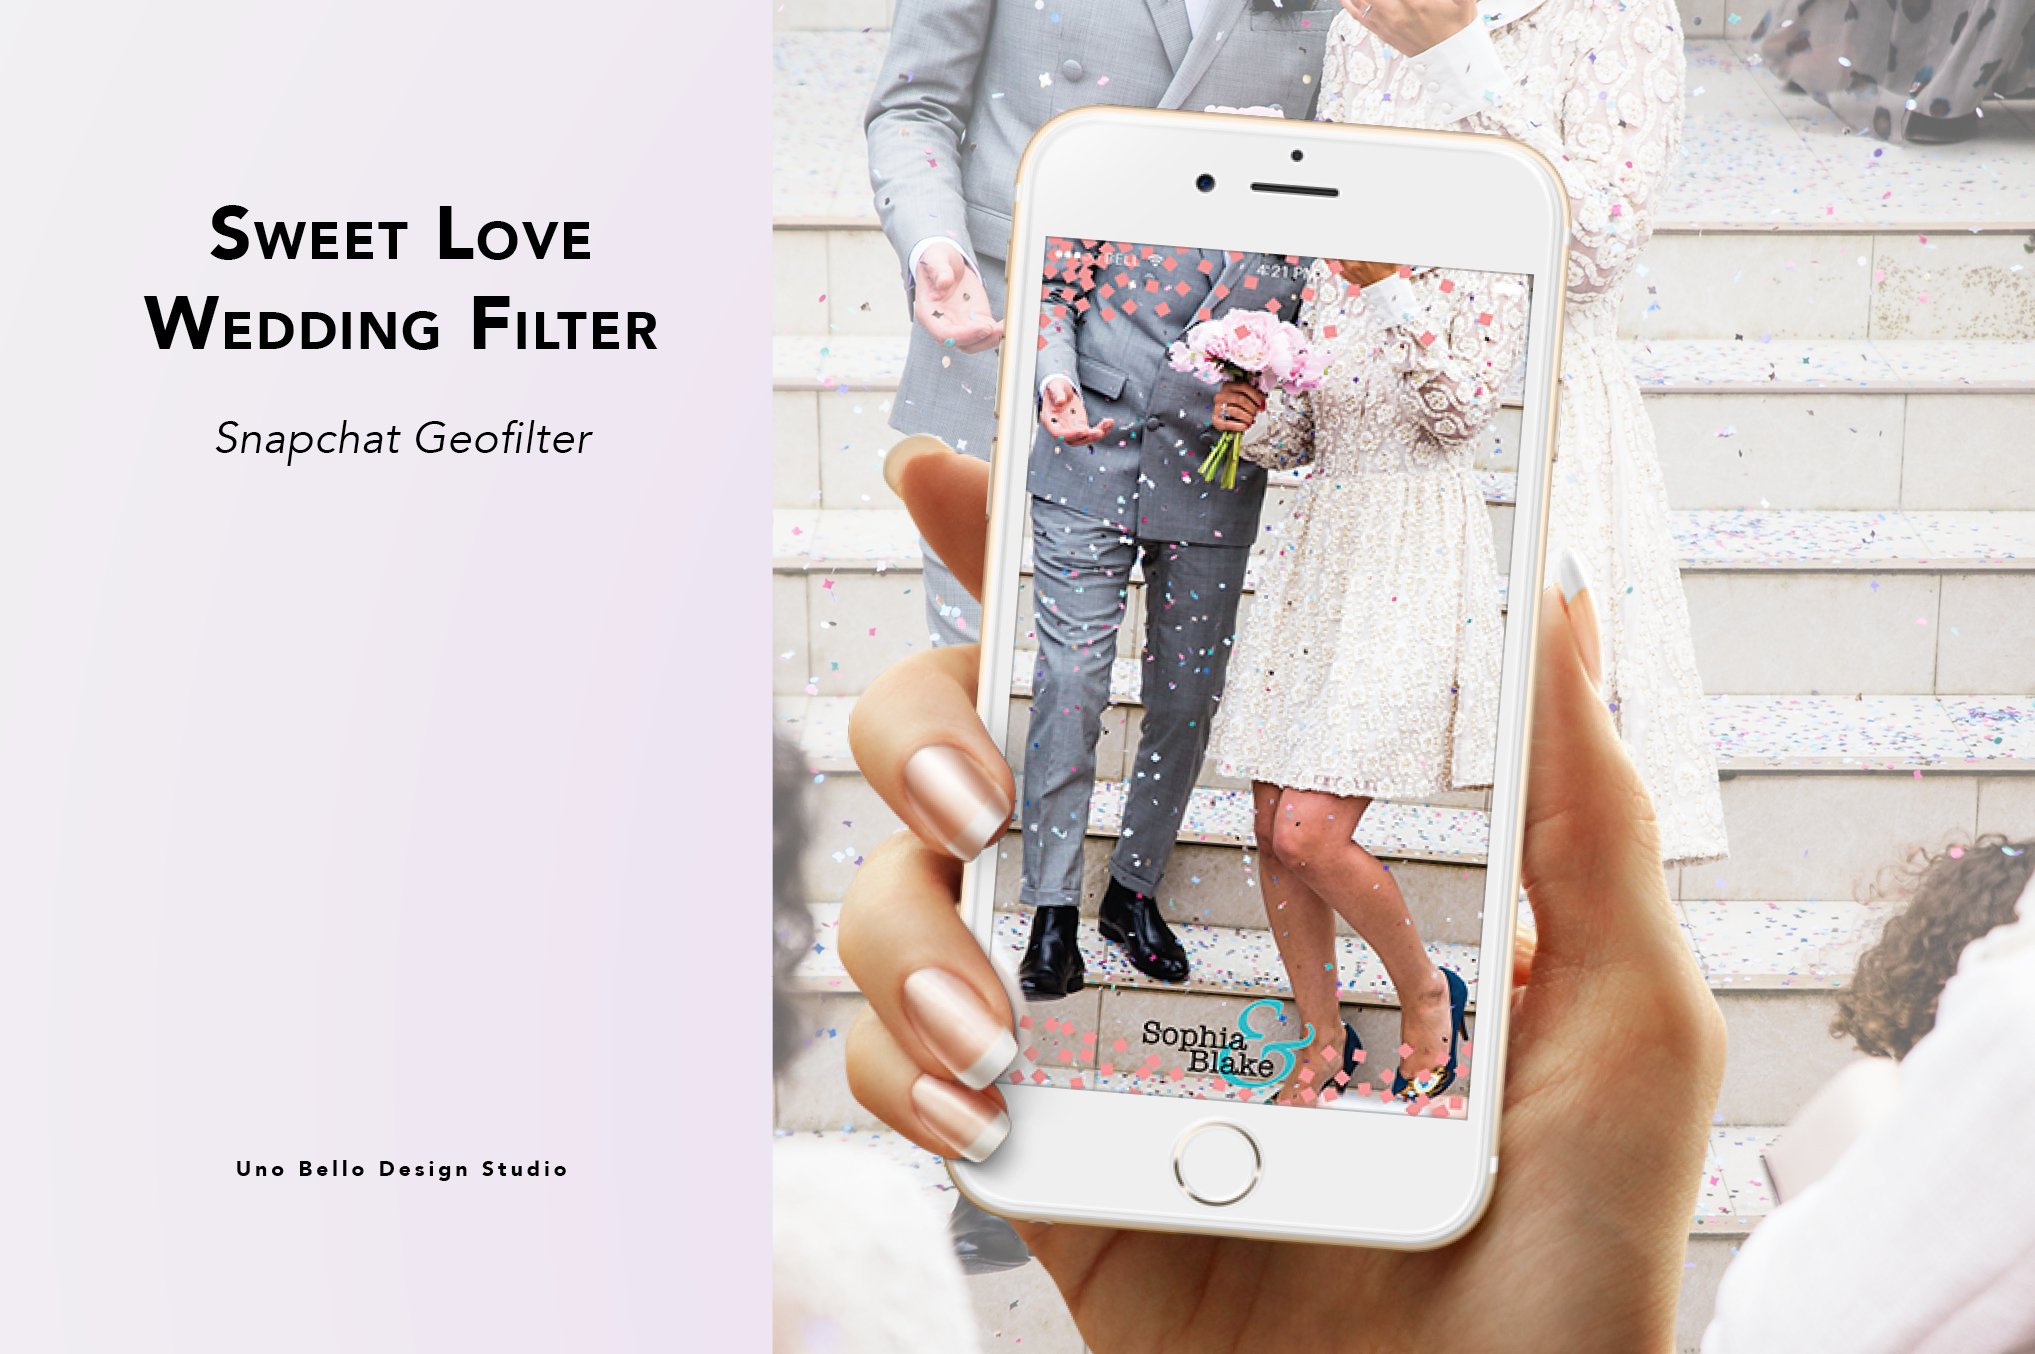 Sweet Love Wedding Geofilter cover image.